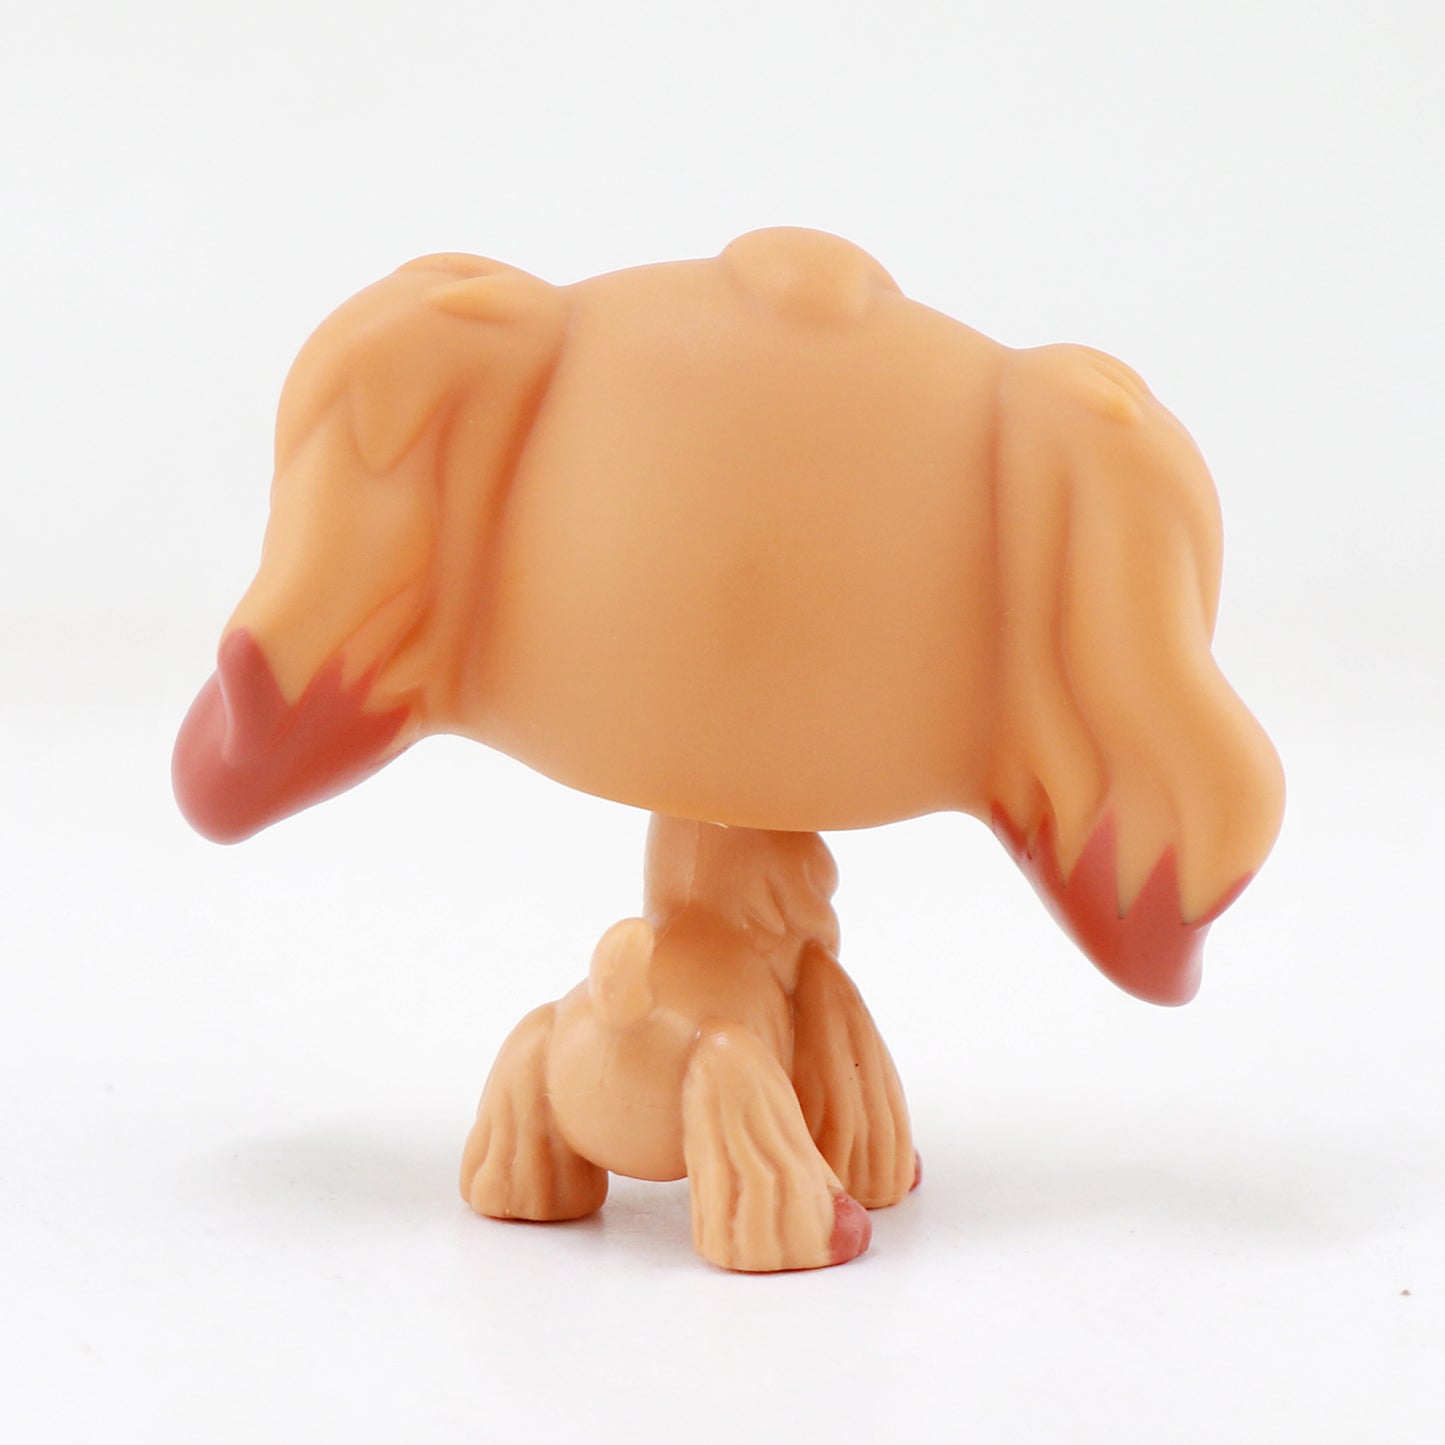 Littlest Pet Shop LPS Cocker Spaniel dog #716 Who Love LPS Kids Gift Rare